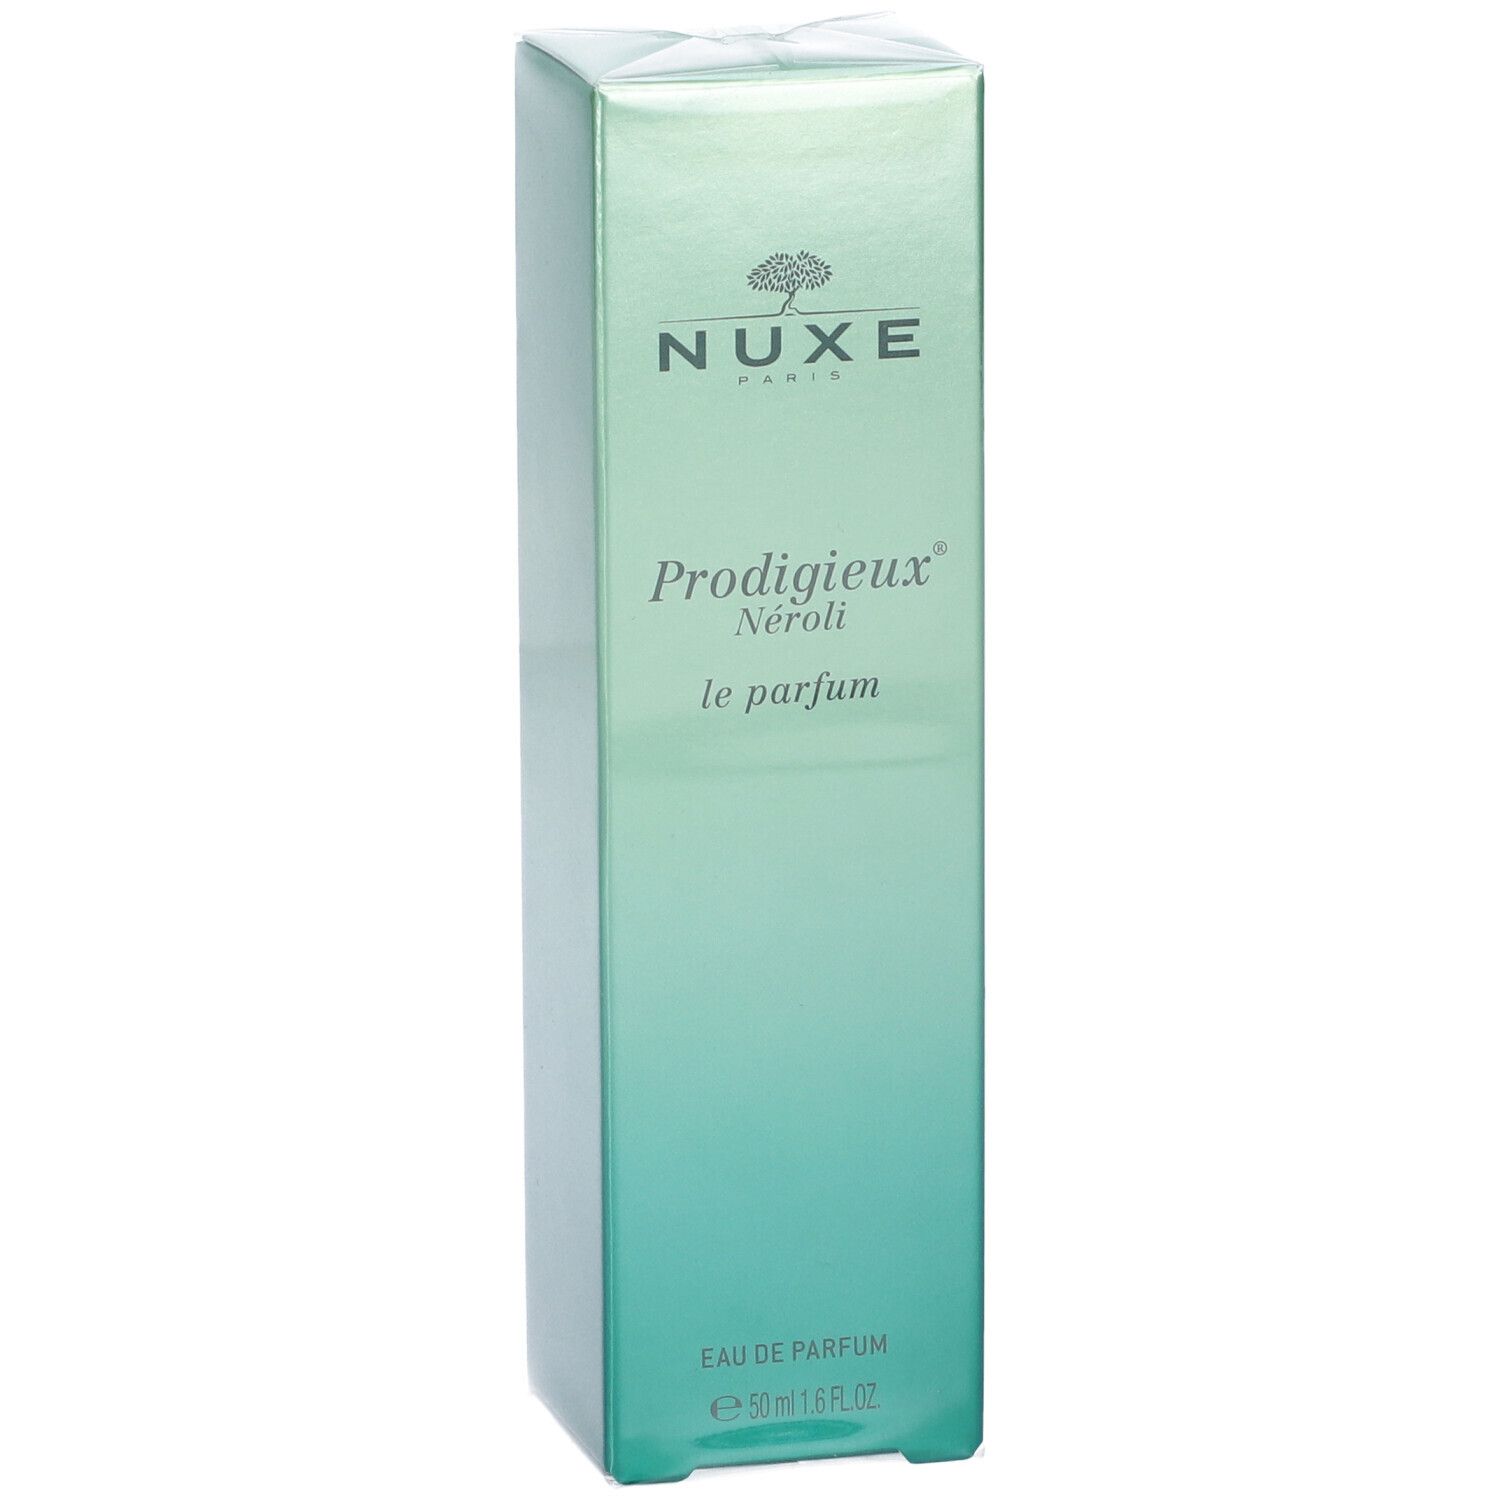 Nuxe Prodigieux Neroli Parfum